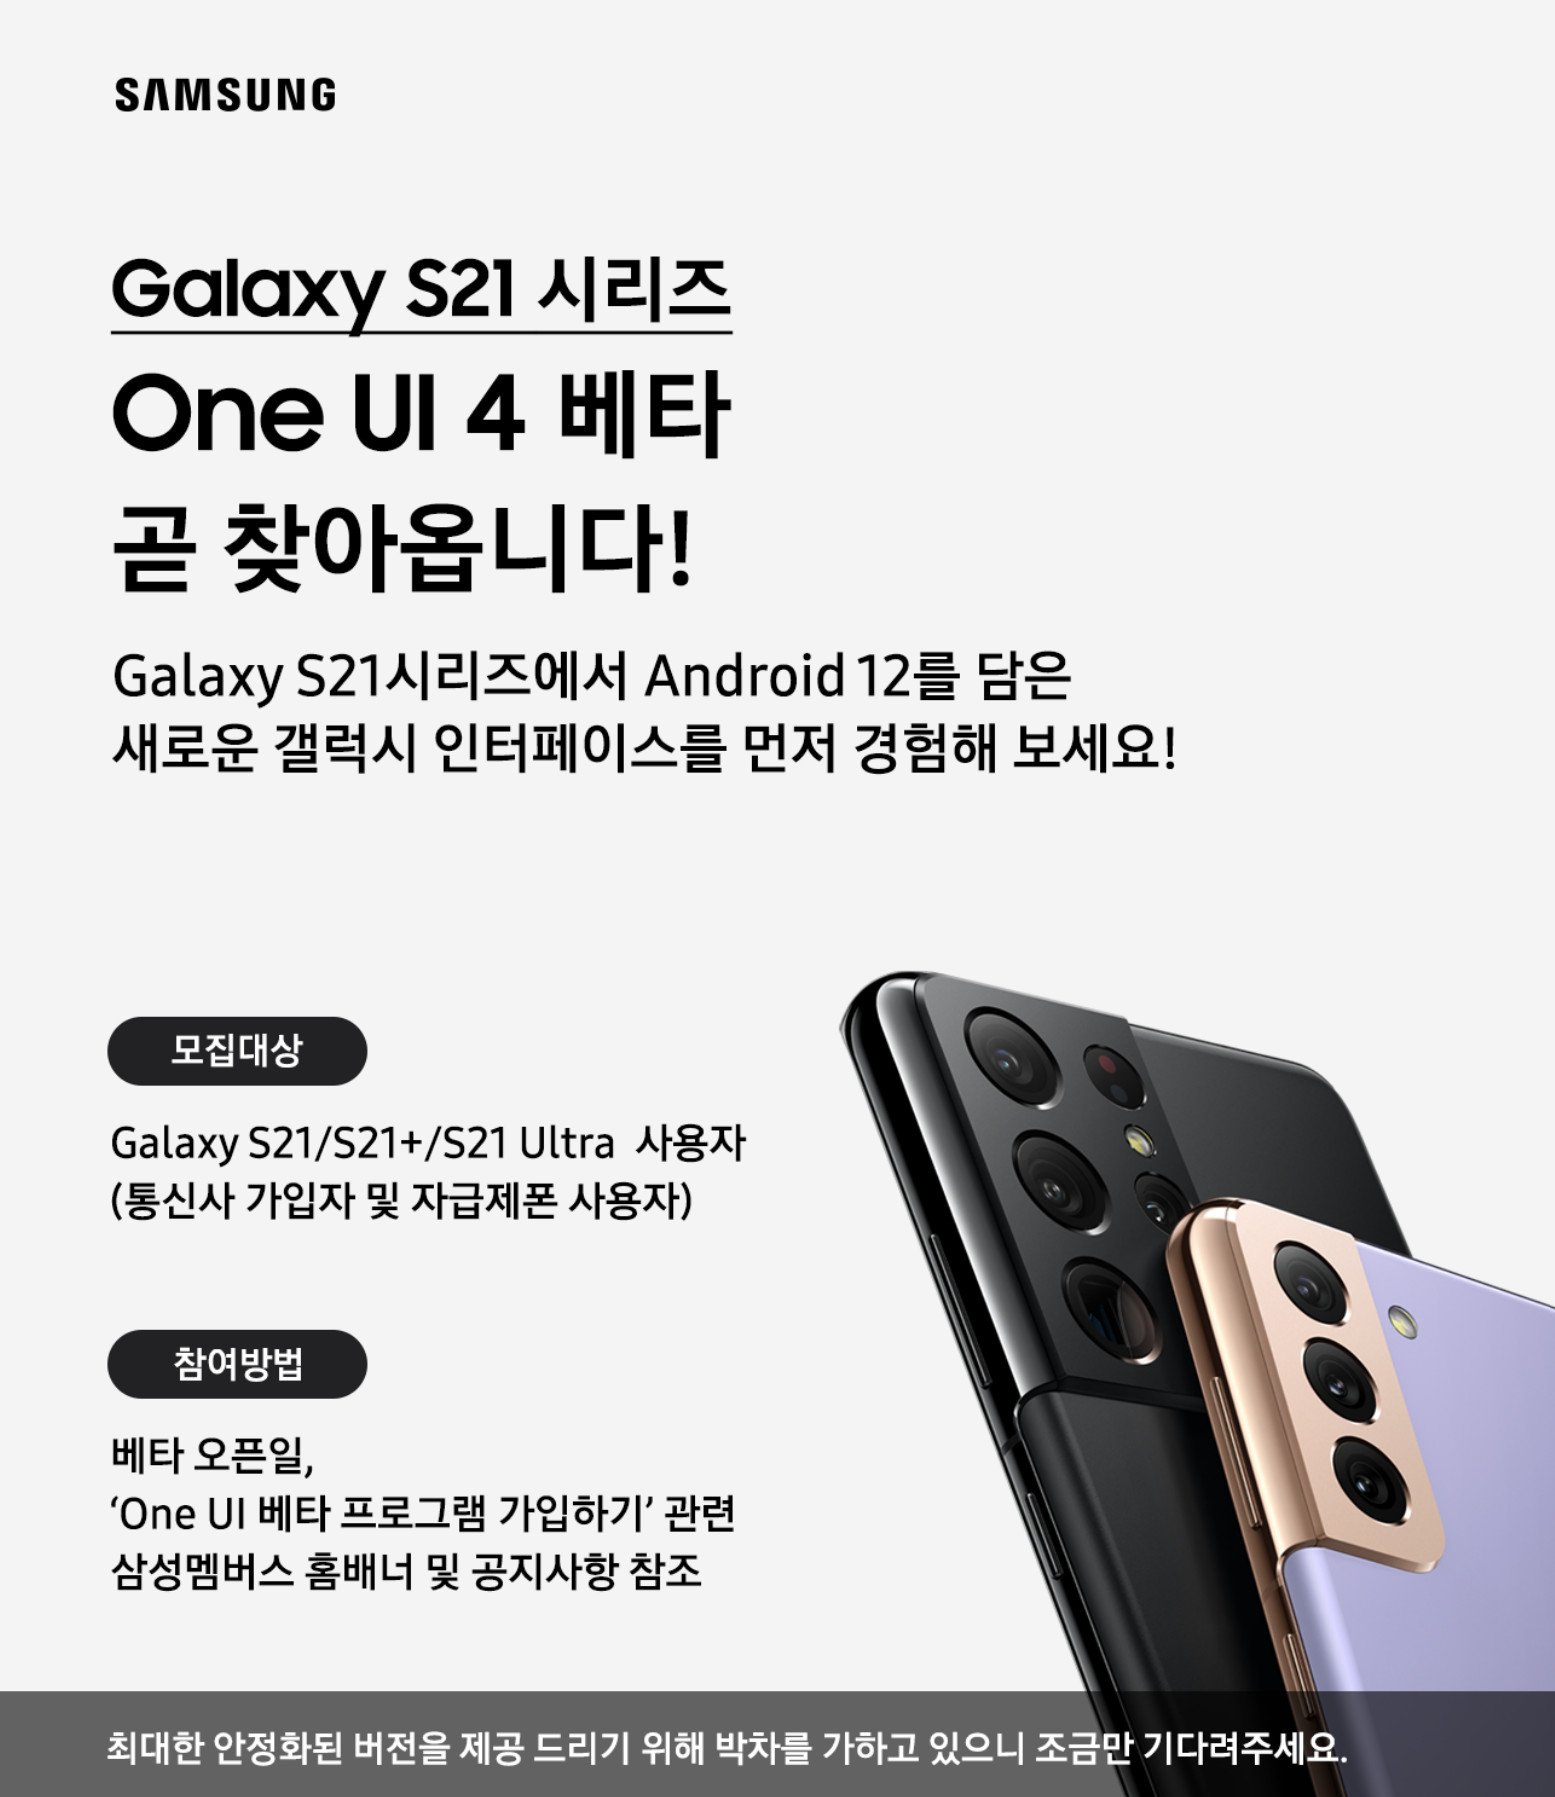 Oneui 4 Beta Announcement Korean